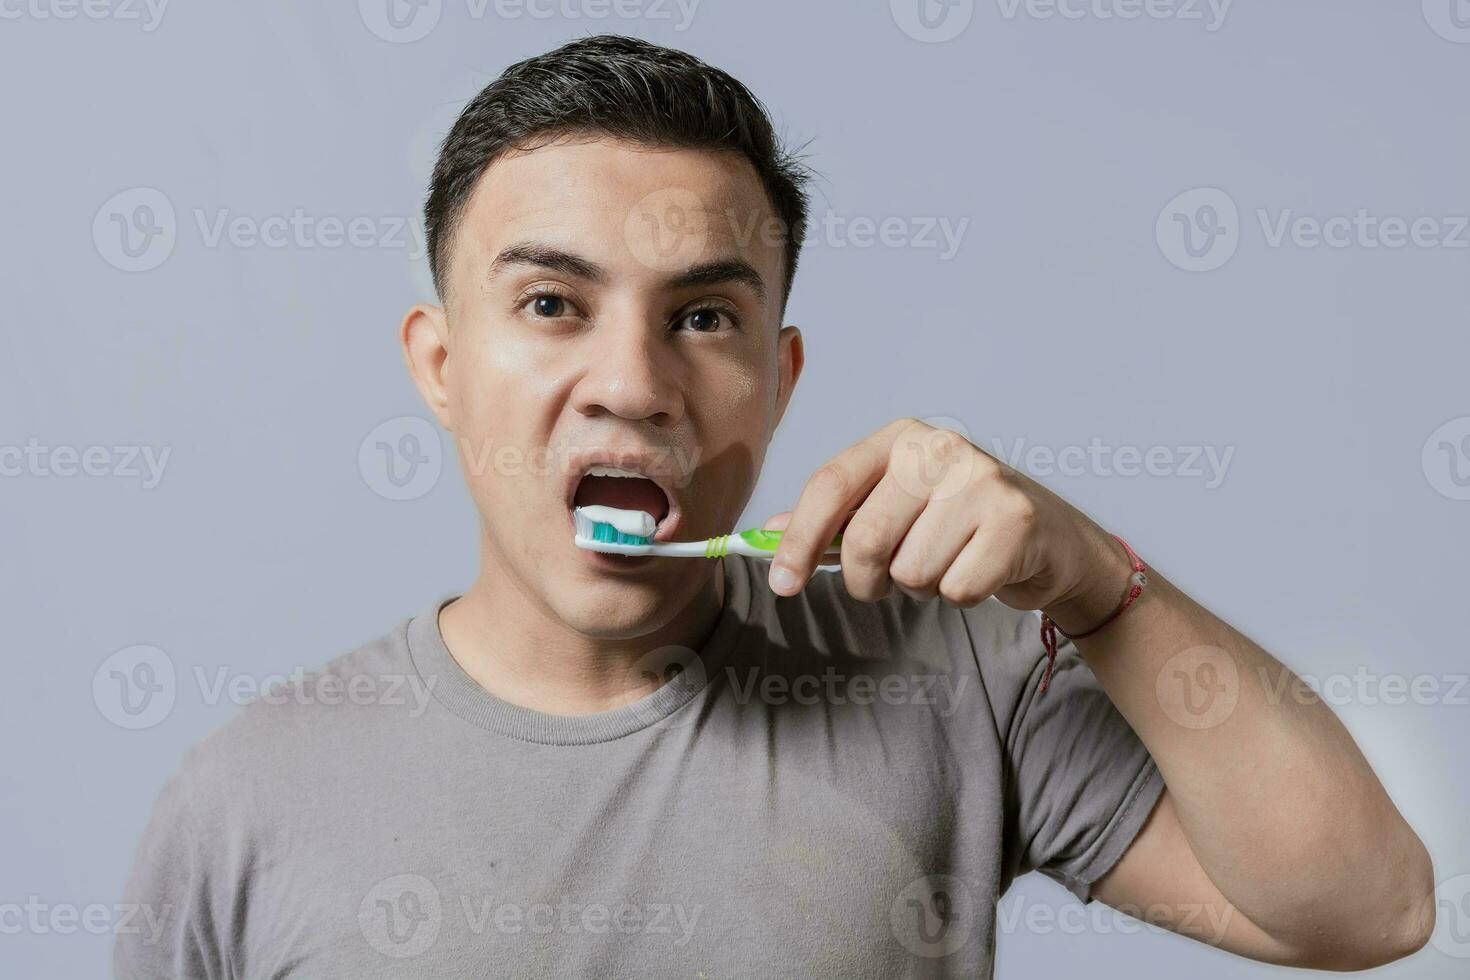 bonito cara escovar dele dentes isolado, fechar acima do bonito homem escovar dele dentes. escovar e dental higiene conceito. fechar acima do pessoas escovar seus dentes em isolado fundo foto